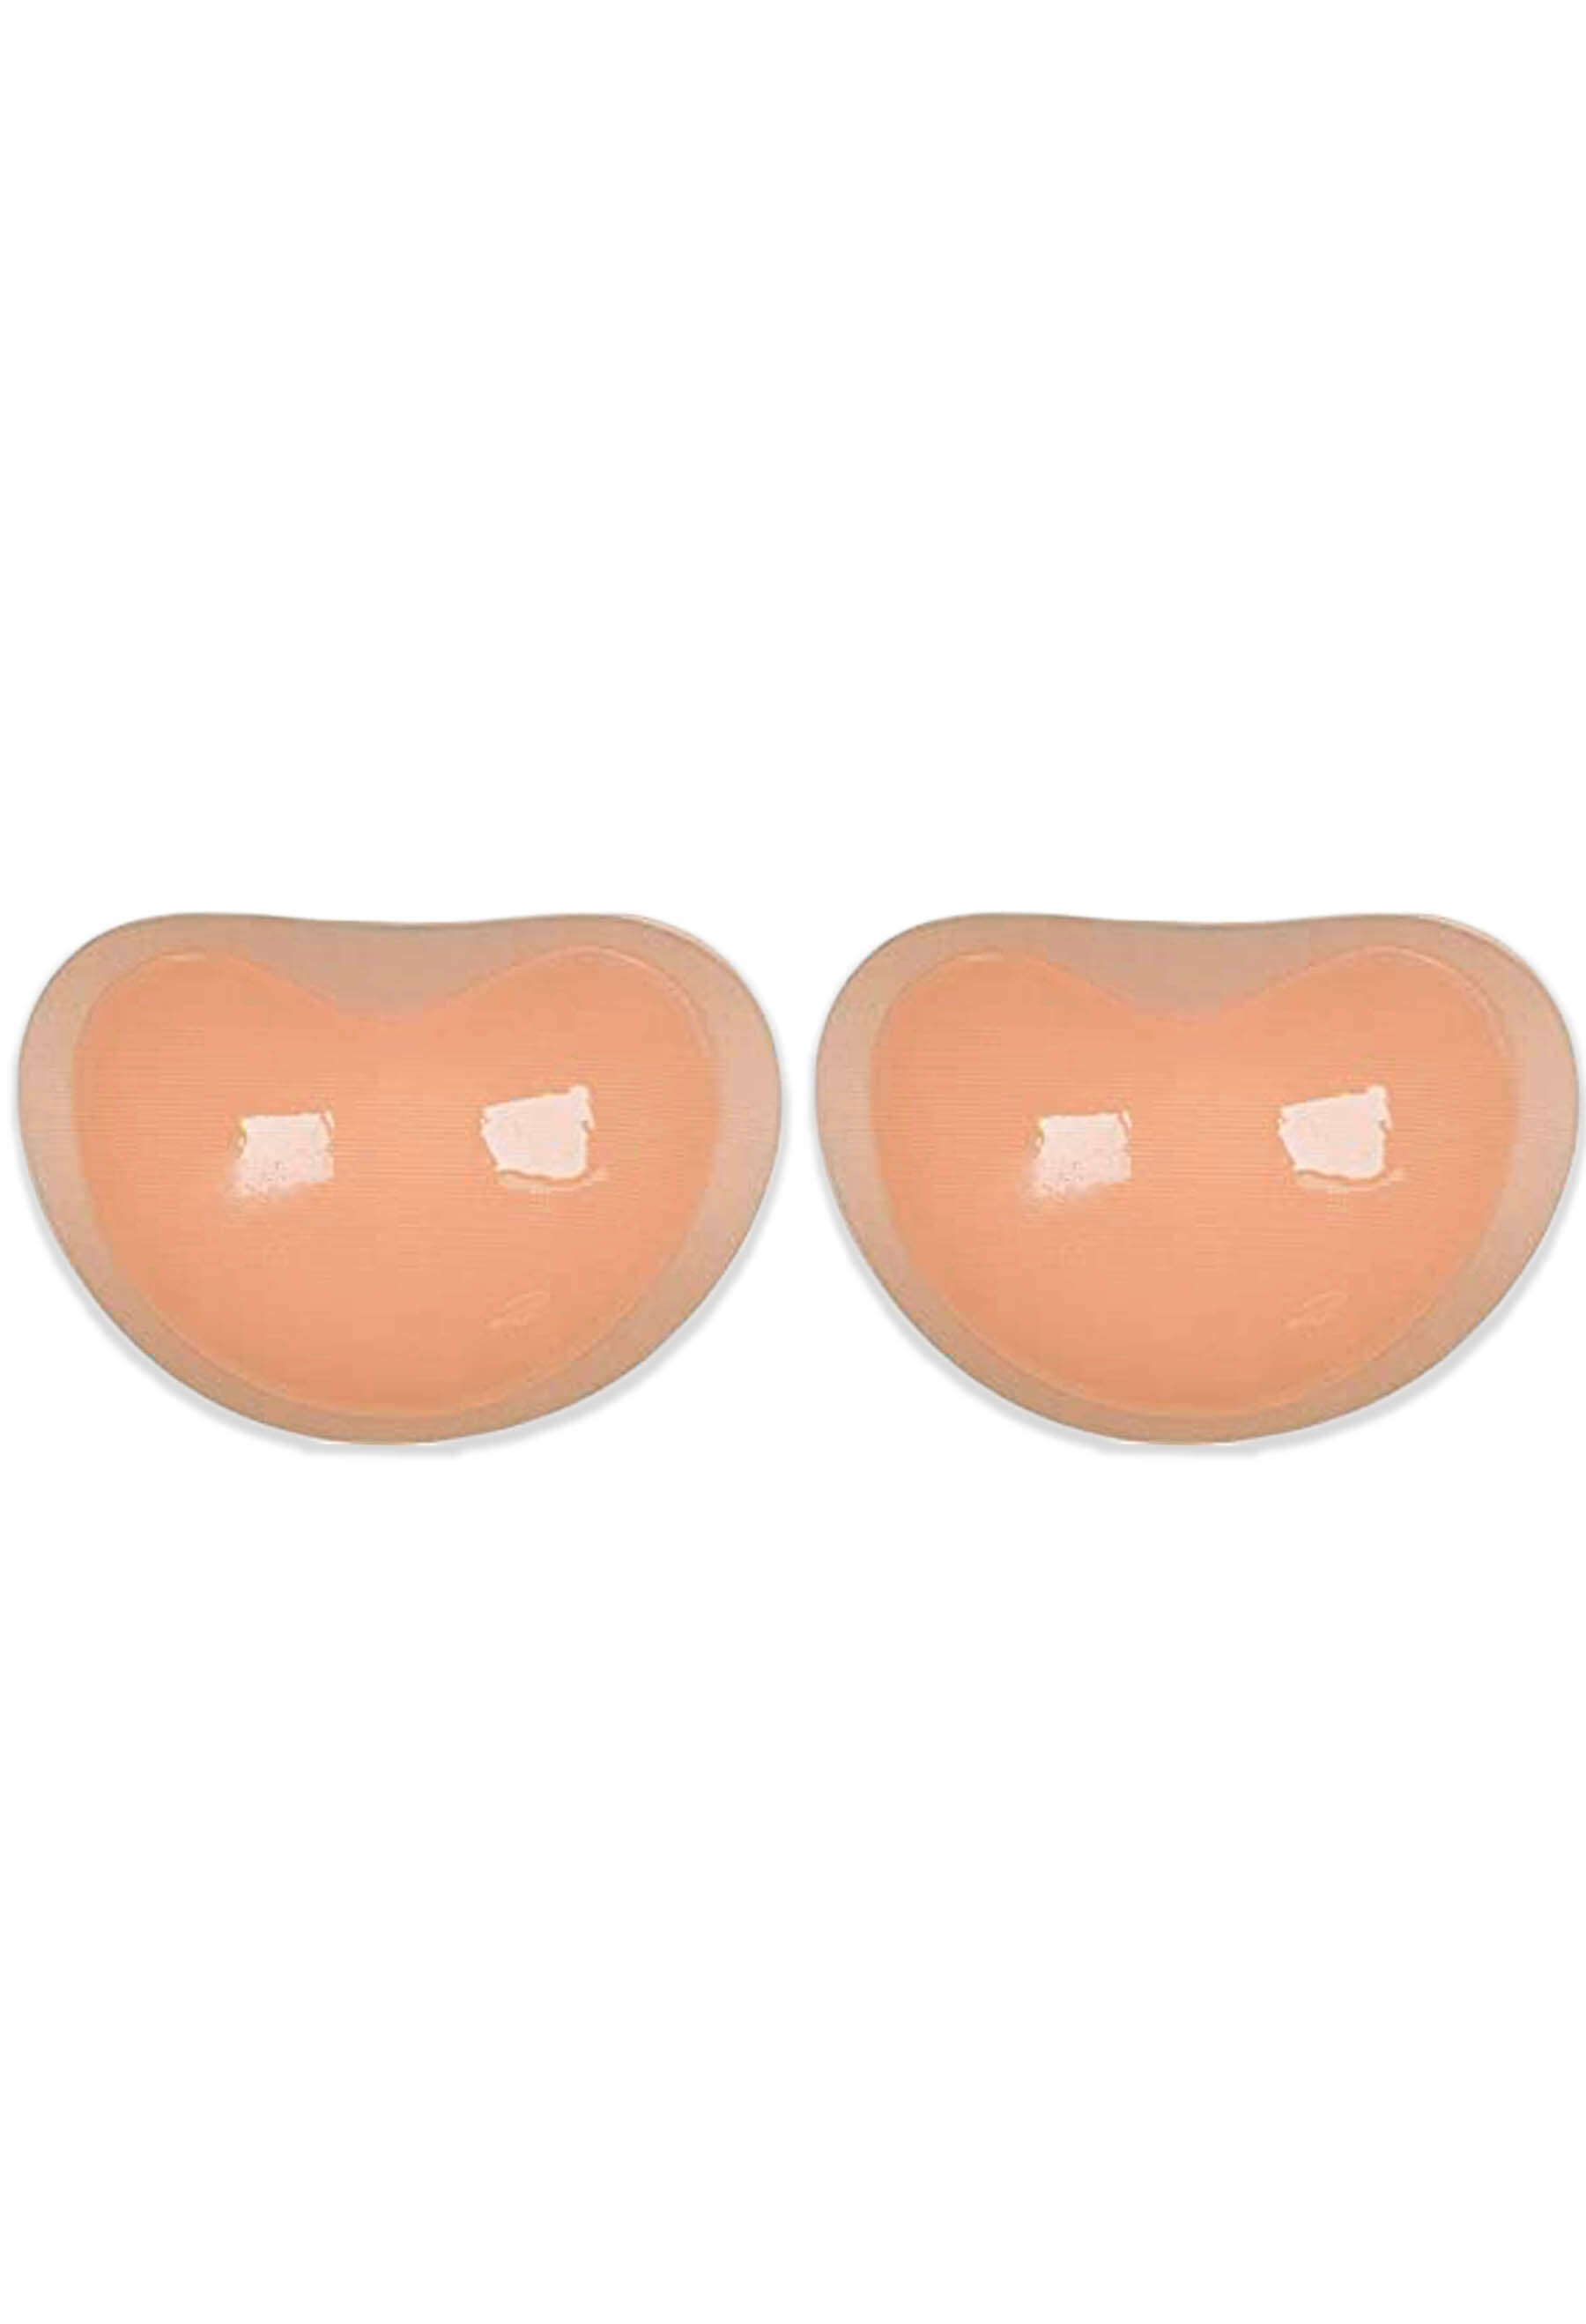 Pair of Foam Bra Pads Breast Form Insert Cleavage Push Up Enhancer